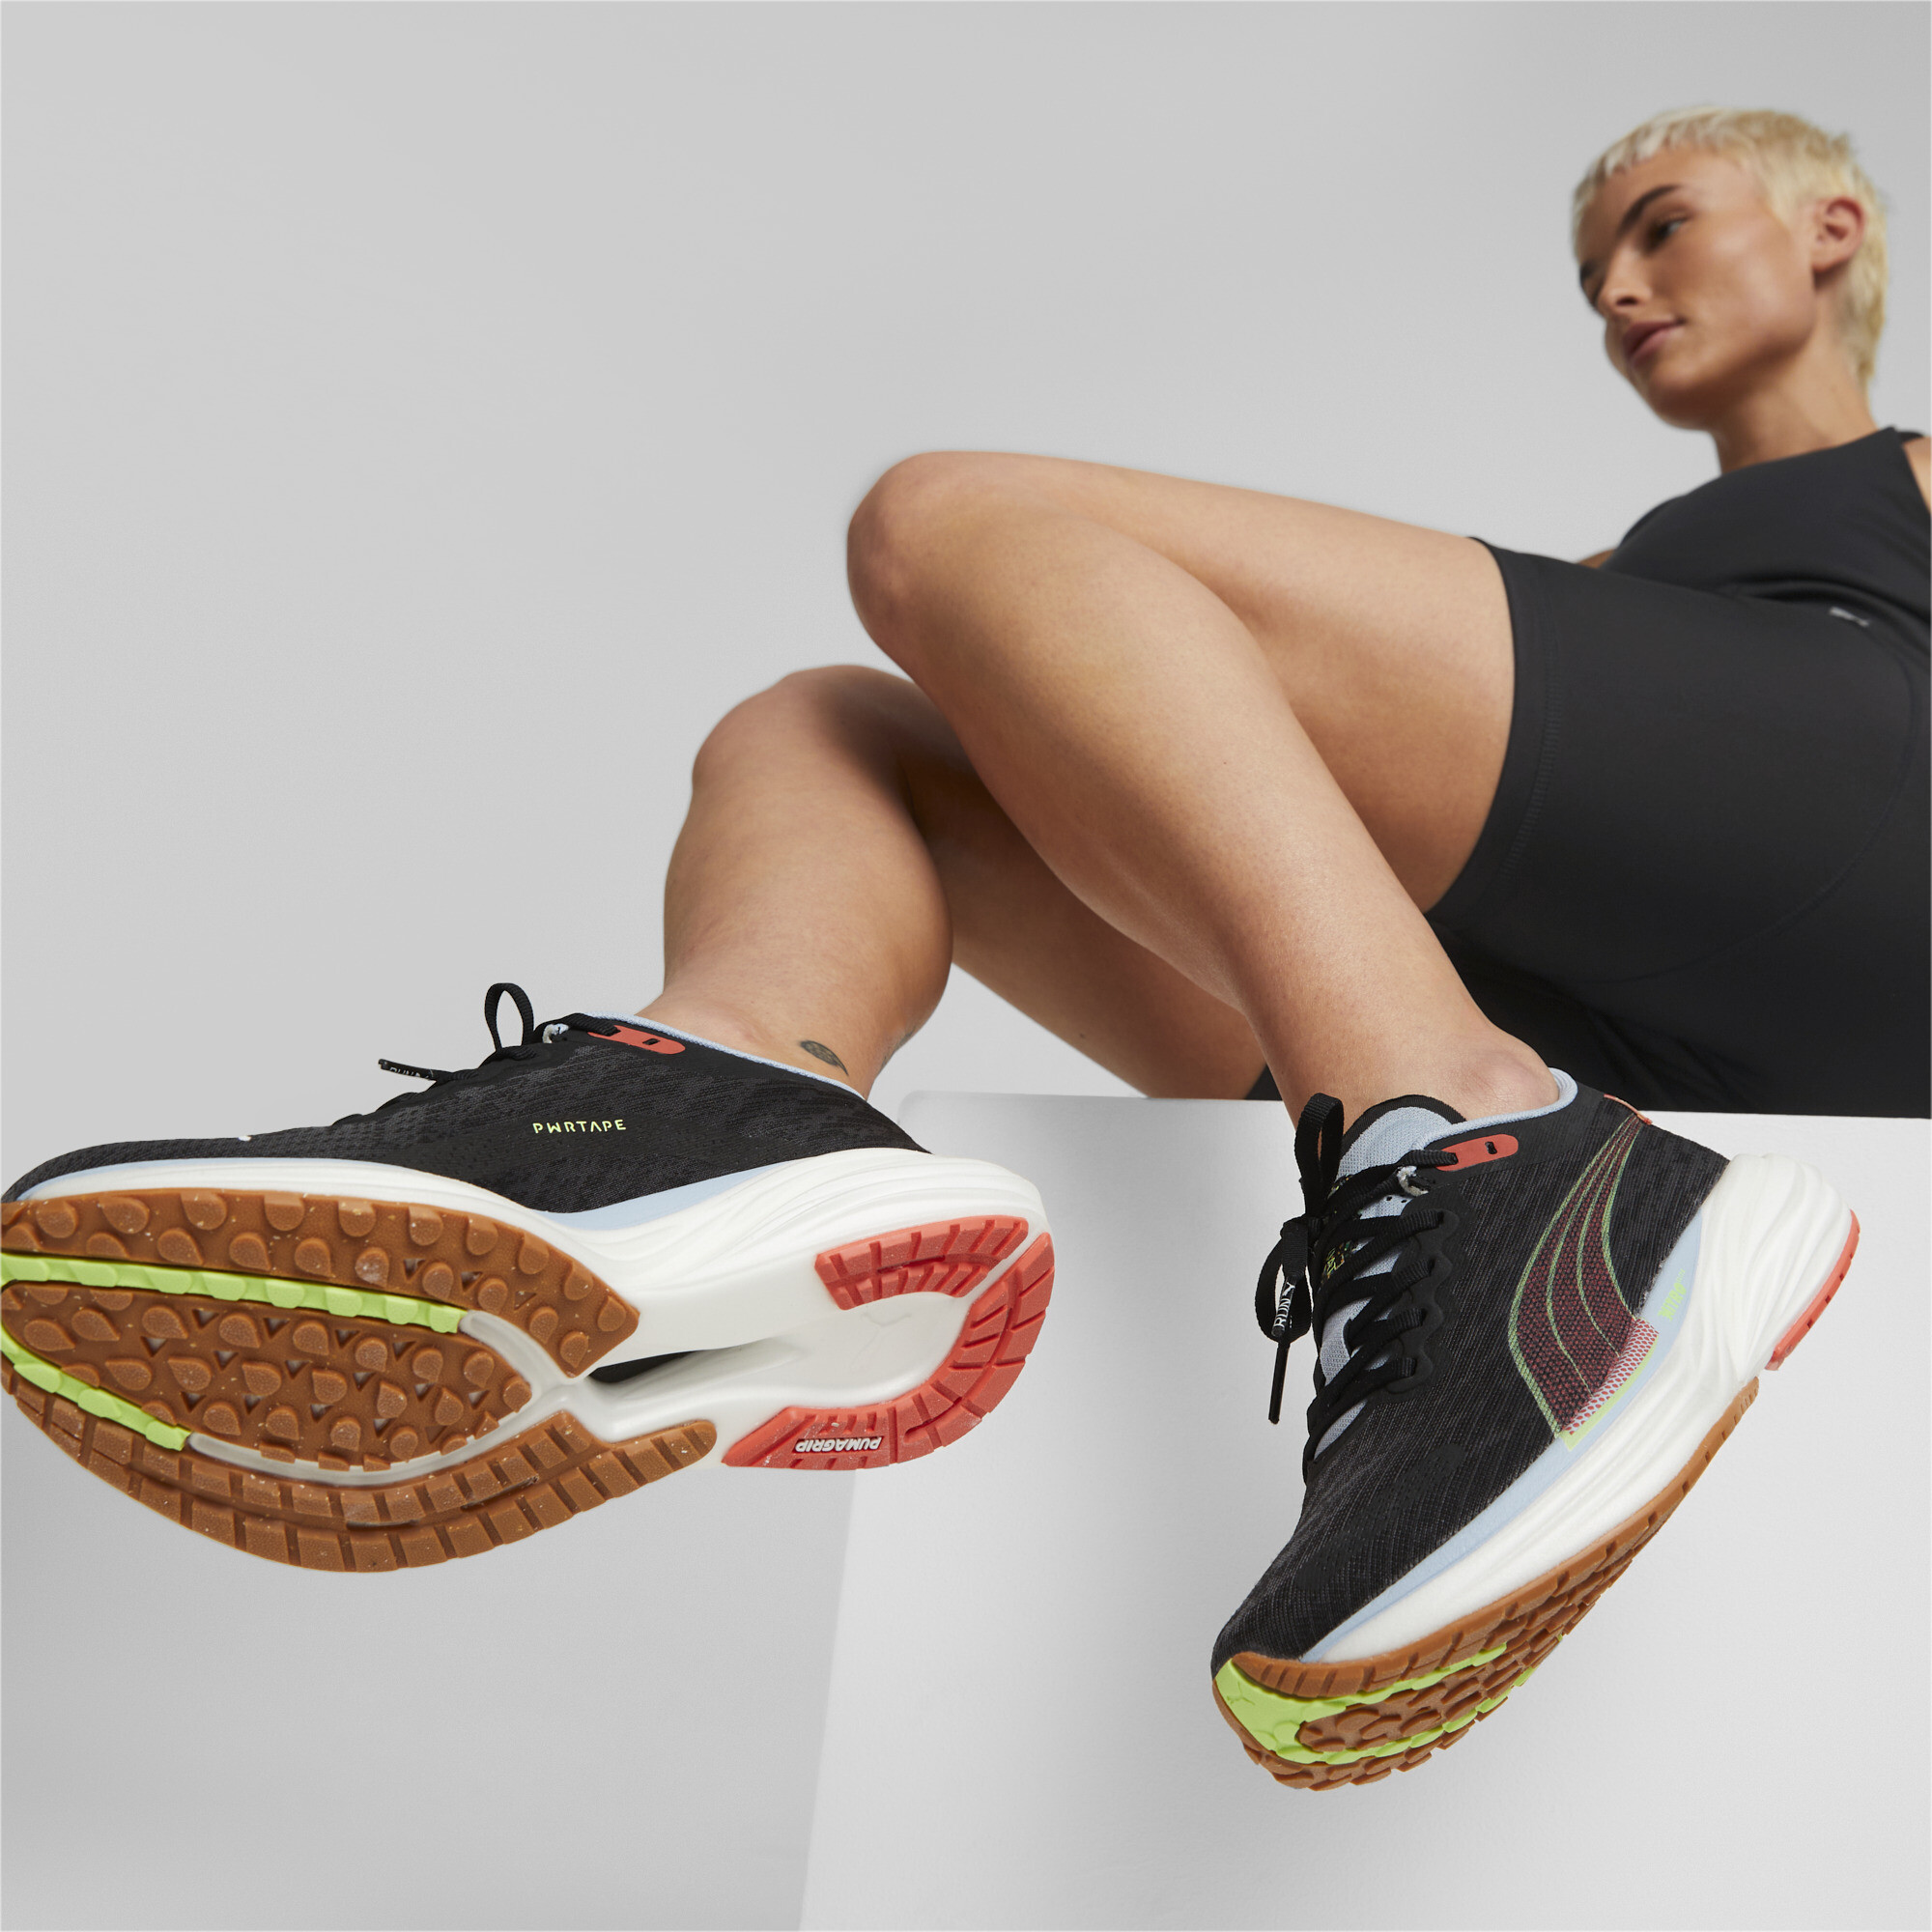 Women's PUMA X FIRST MILE Deviate NITRO 2 Running Shoes Women In Black, Size EU 41